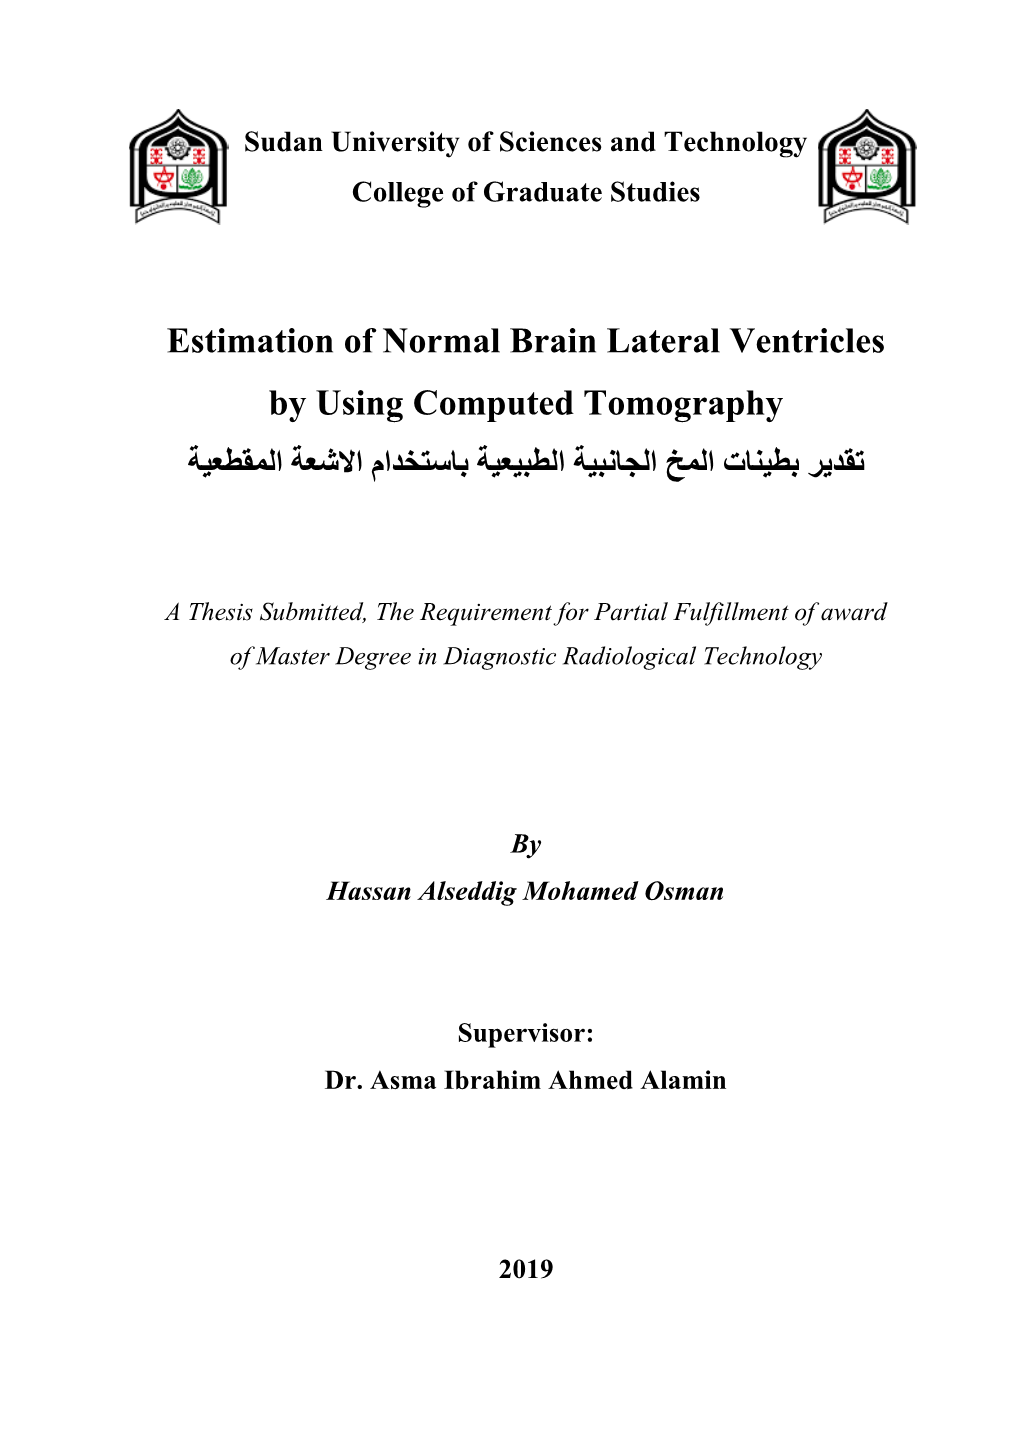 Estimation of Normal Brain Lateral Ventricles by Using Computed Tomography تقدير بطيناث المخ الجانبيت الطبيعيت باستخدام االشعت المقطعيت